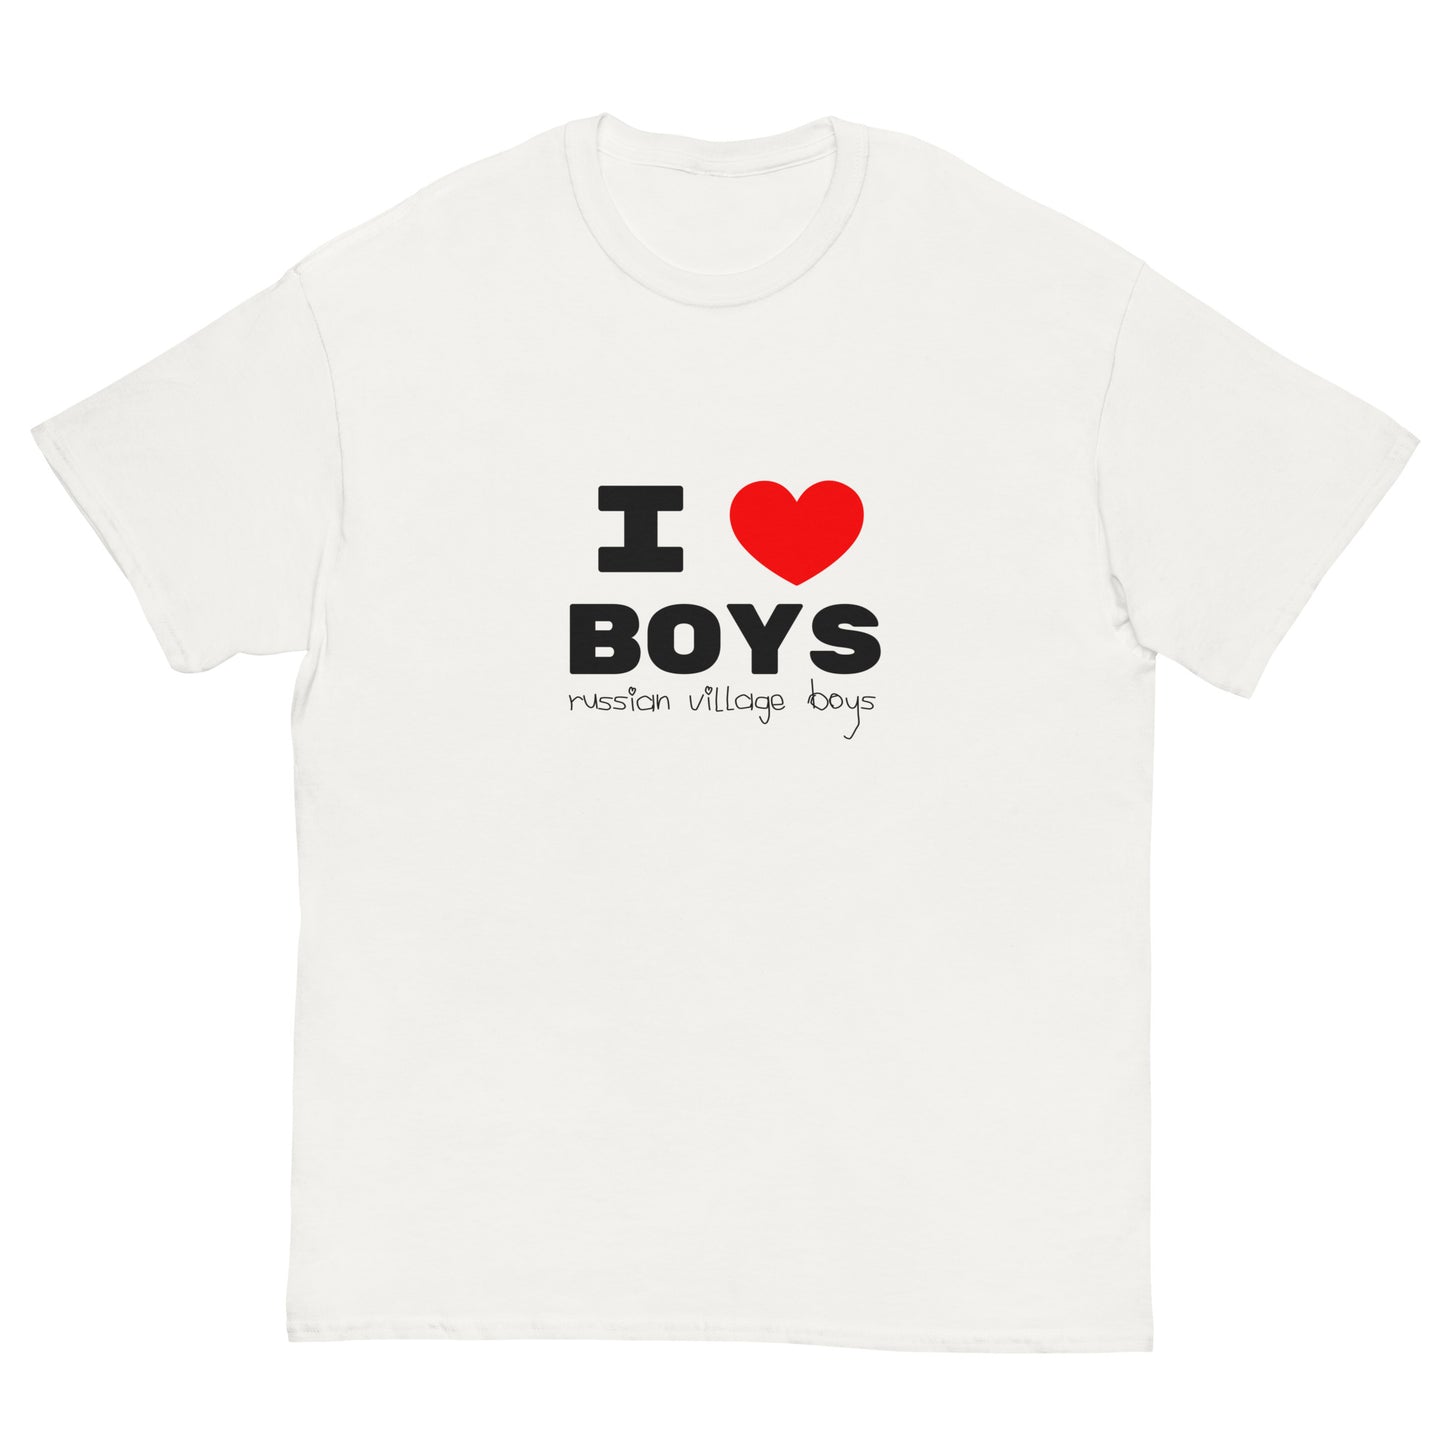 I love boys, russian village boys T-shirt